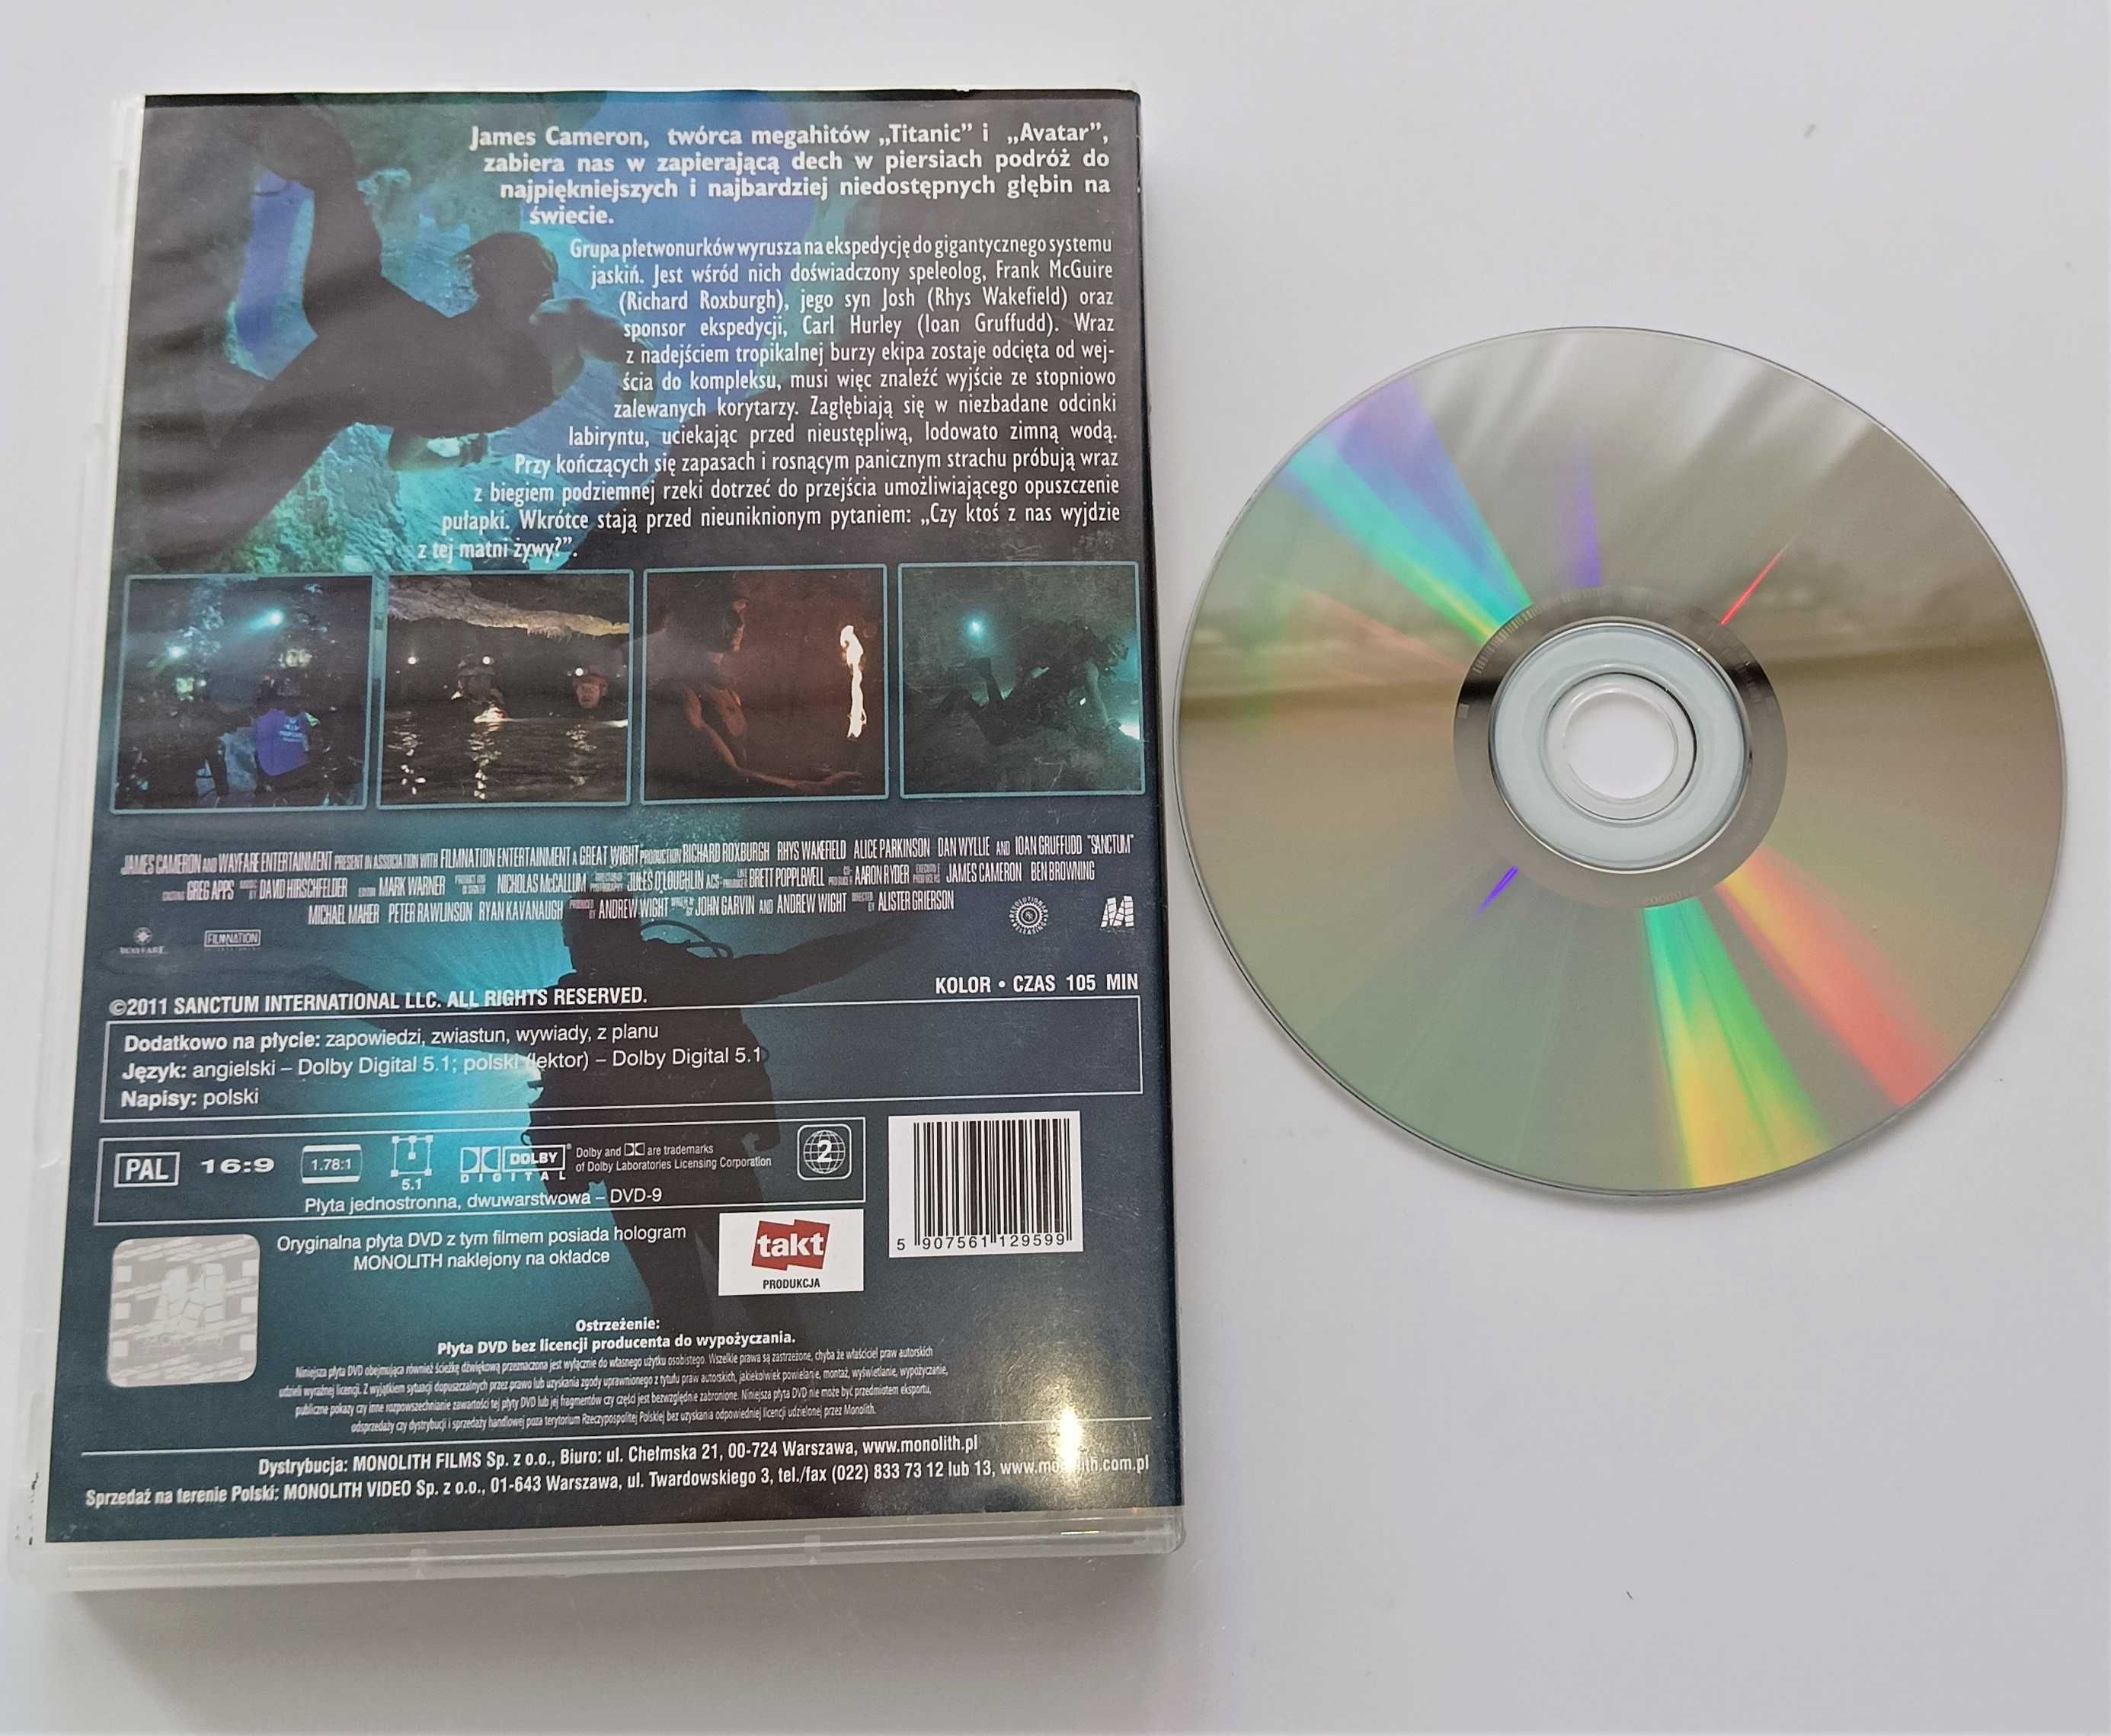 Sanctum reż. Cameron film płyta DVD